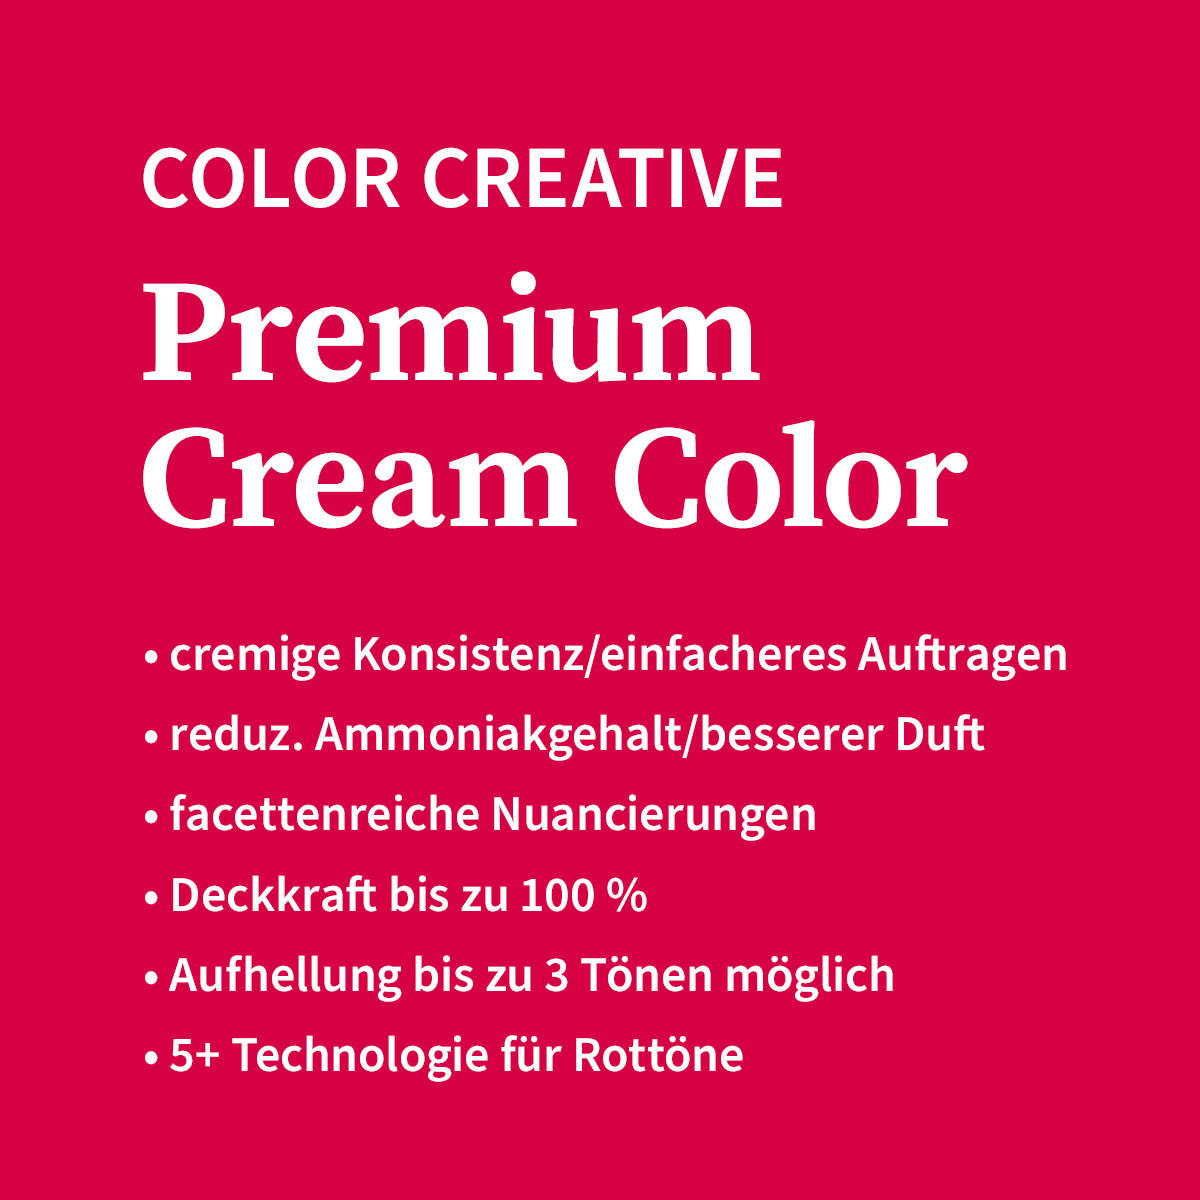 Basler Color Creative Premium Cream Color 6/01 dunkelblond natur asch, Tube 60 ml - 4